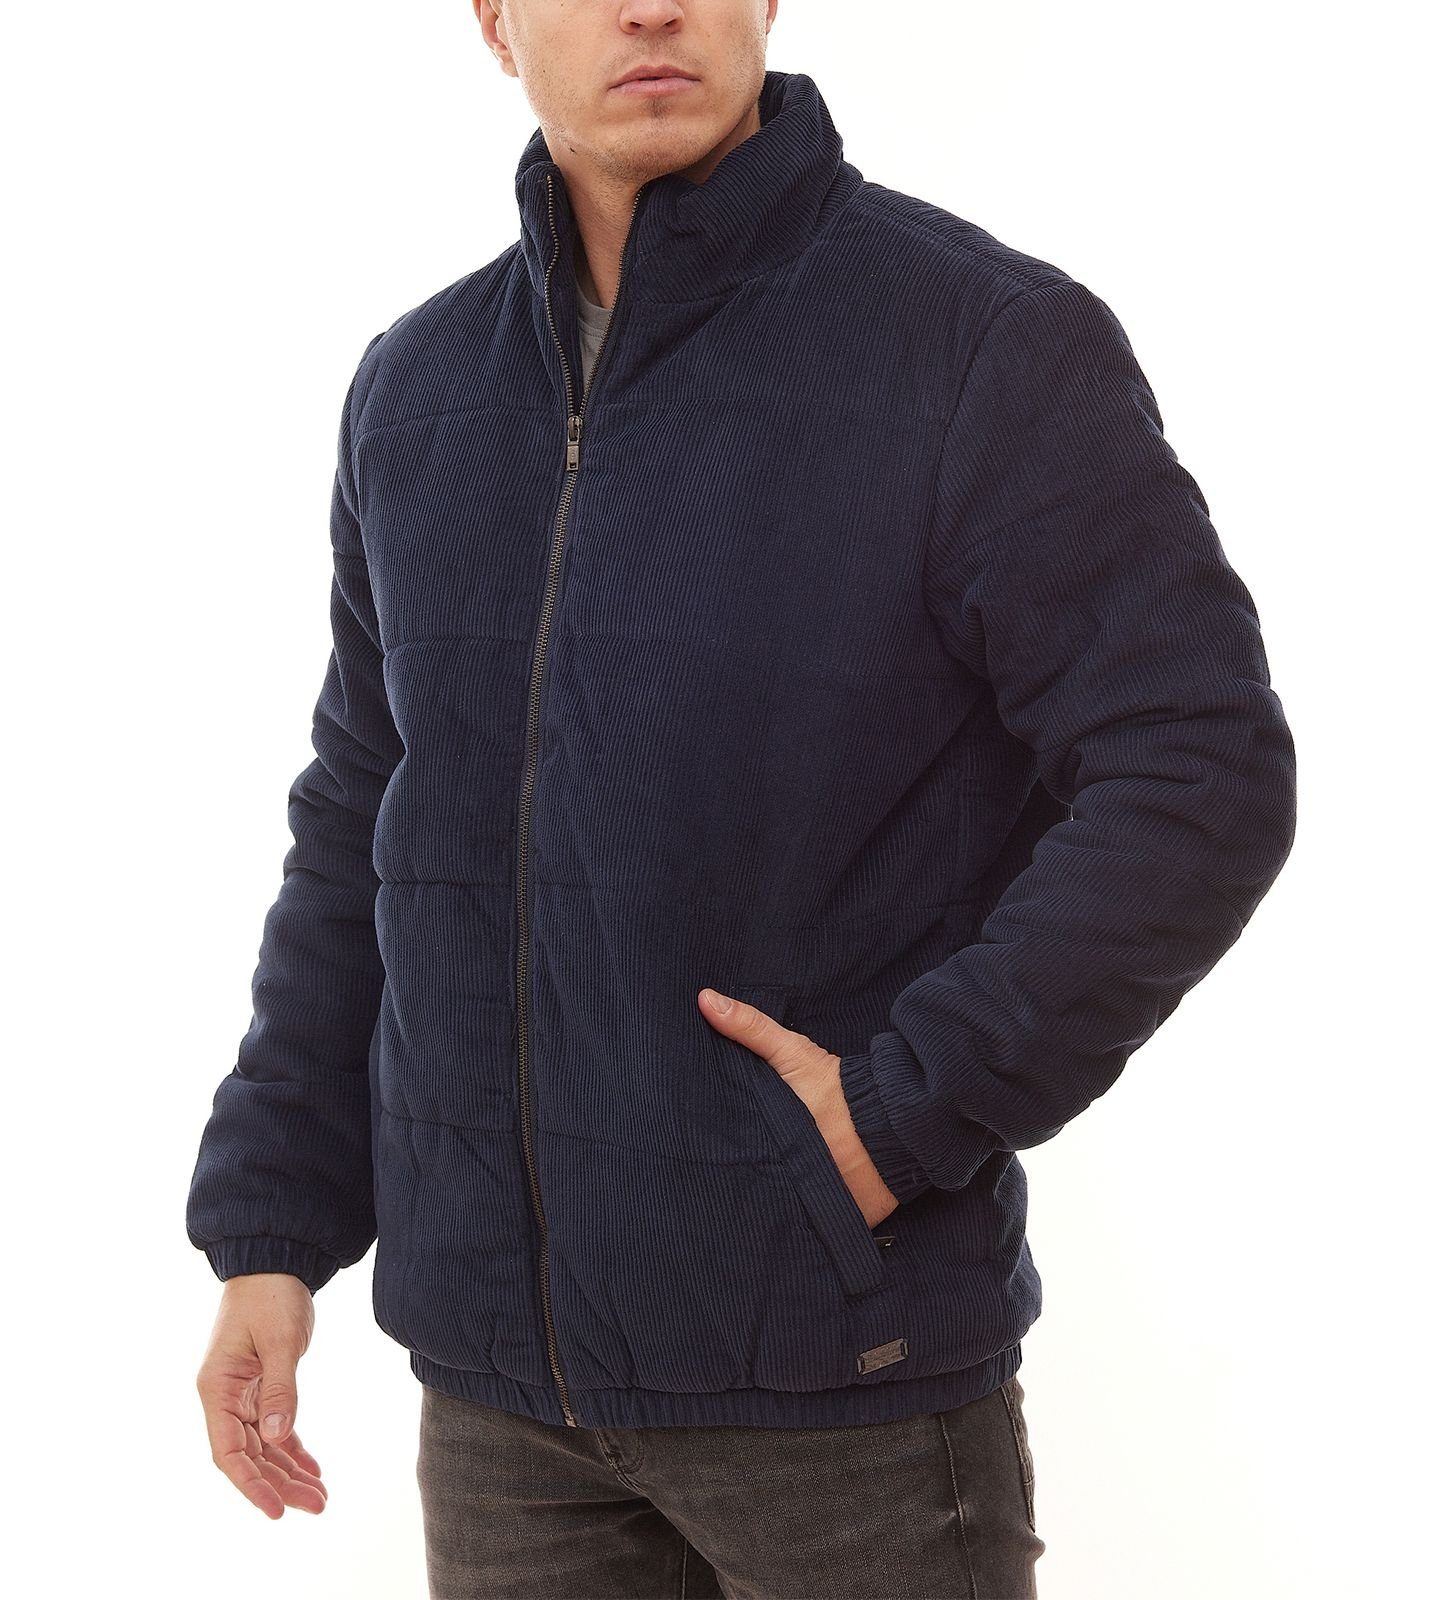 Baumwolle Outdoorjacke aus BLEND Herren Jacke Blau Blend Cord-Jacke 20712318 Übergangs-Jacke Sodio nachhaltige